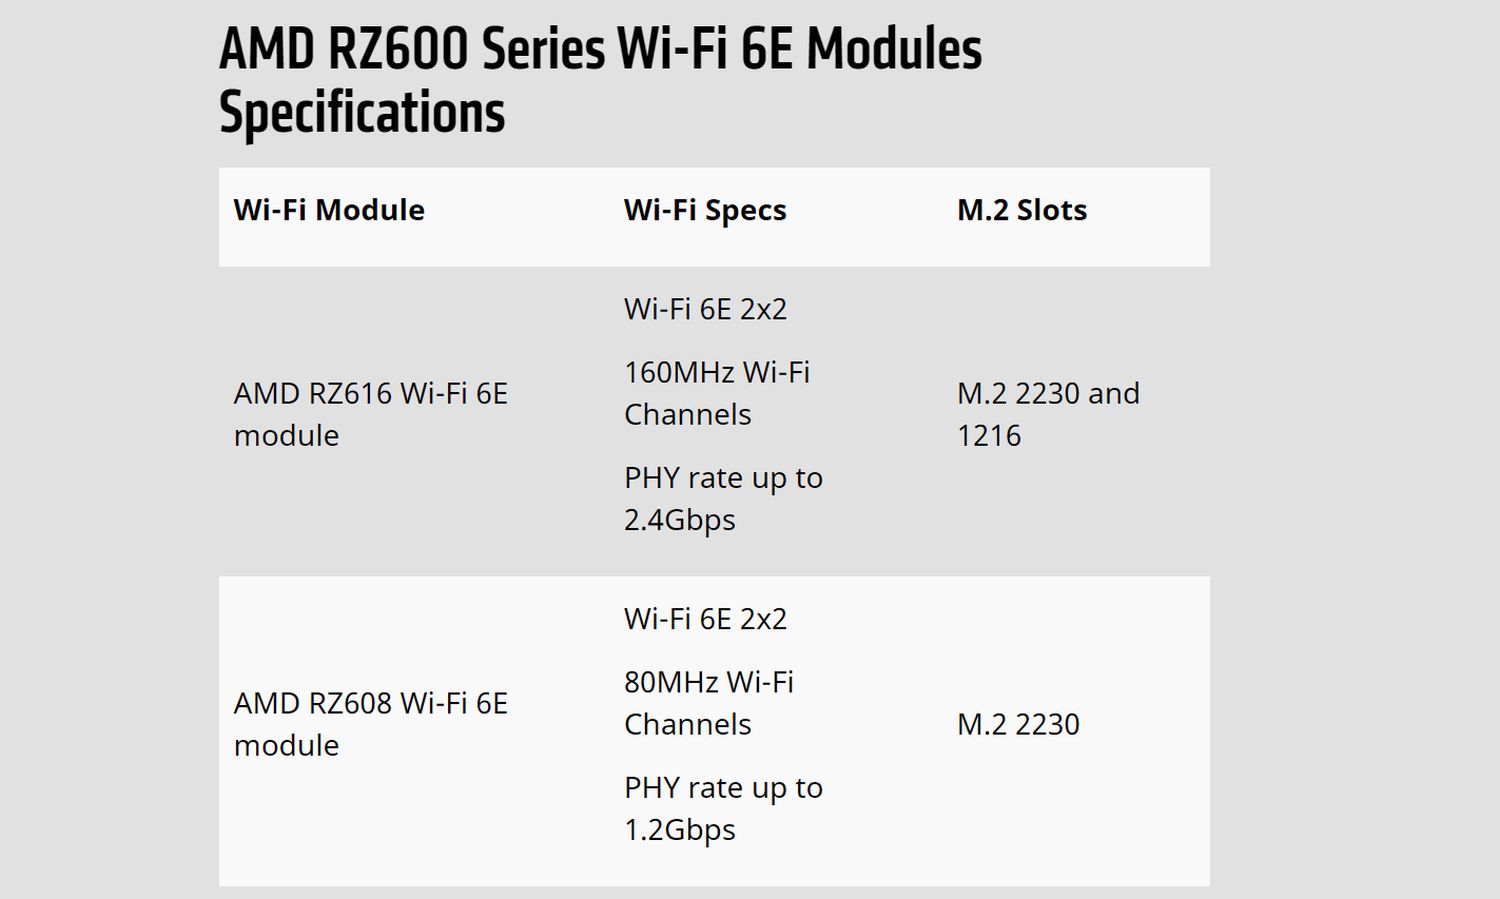 AMD MediaTek RZ600 Series WiFi 6E modules